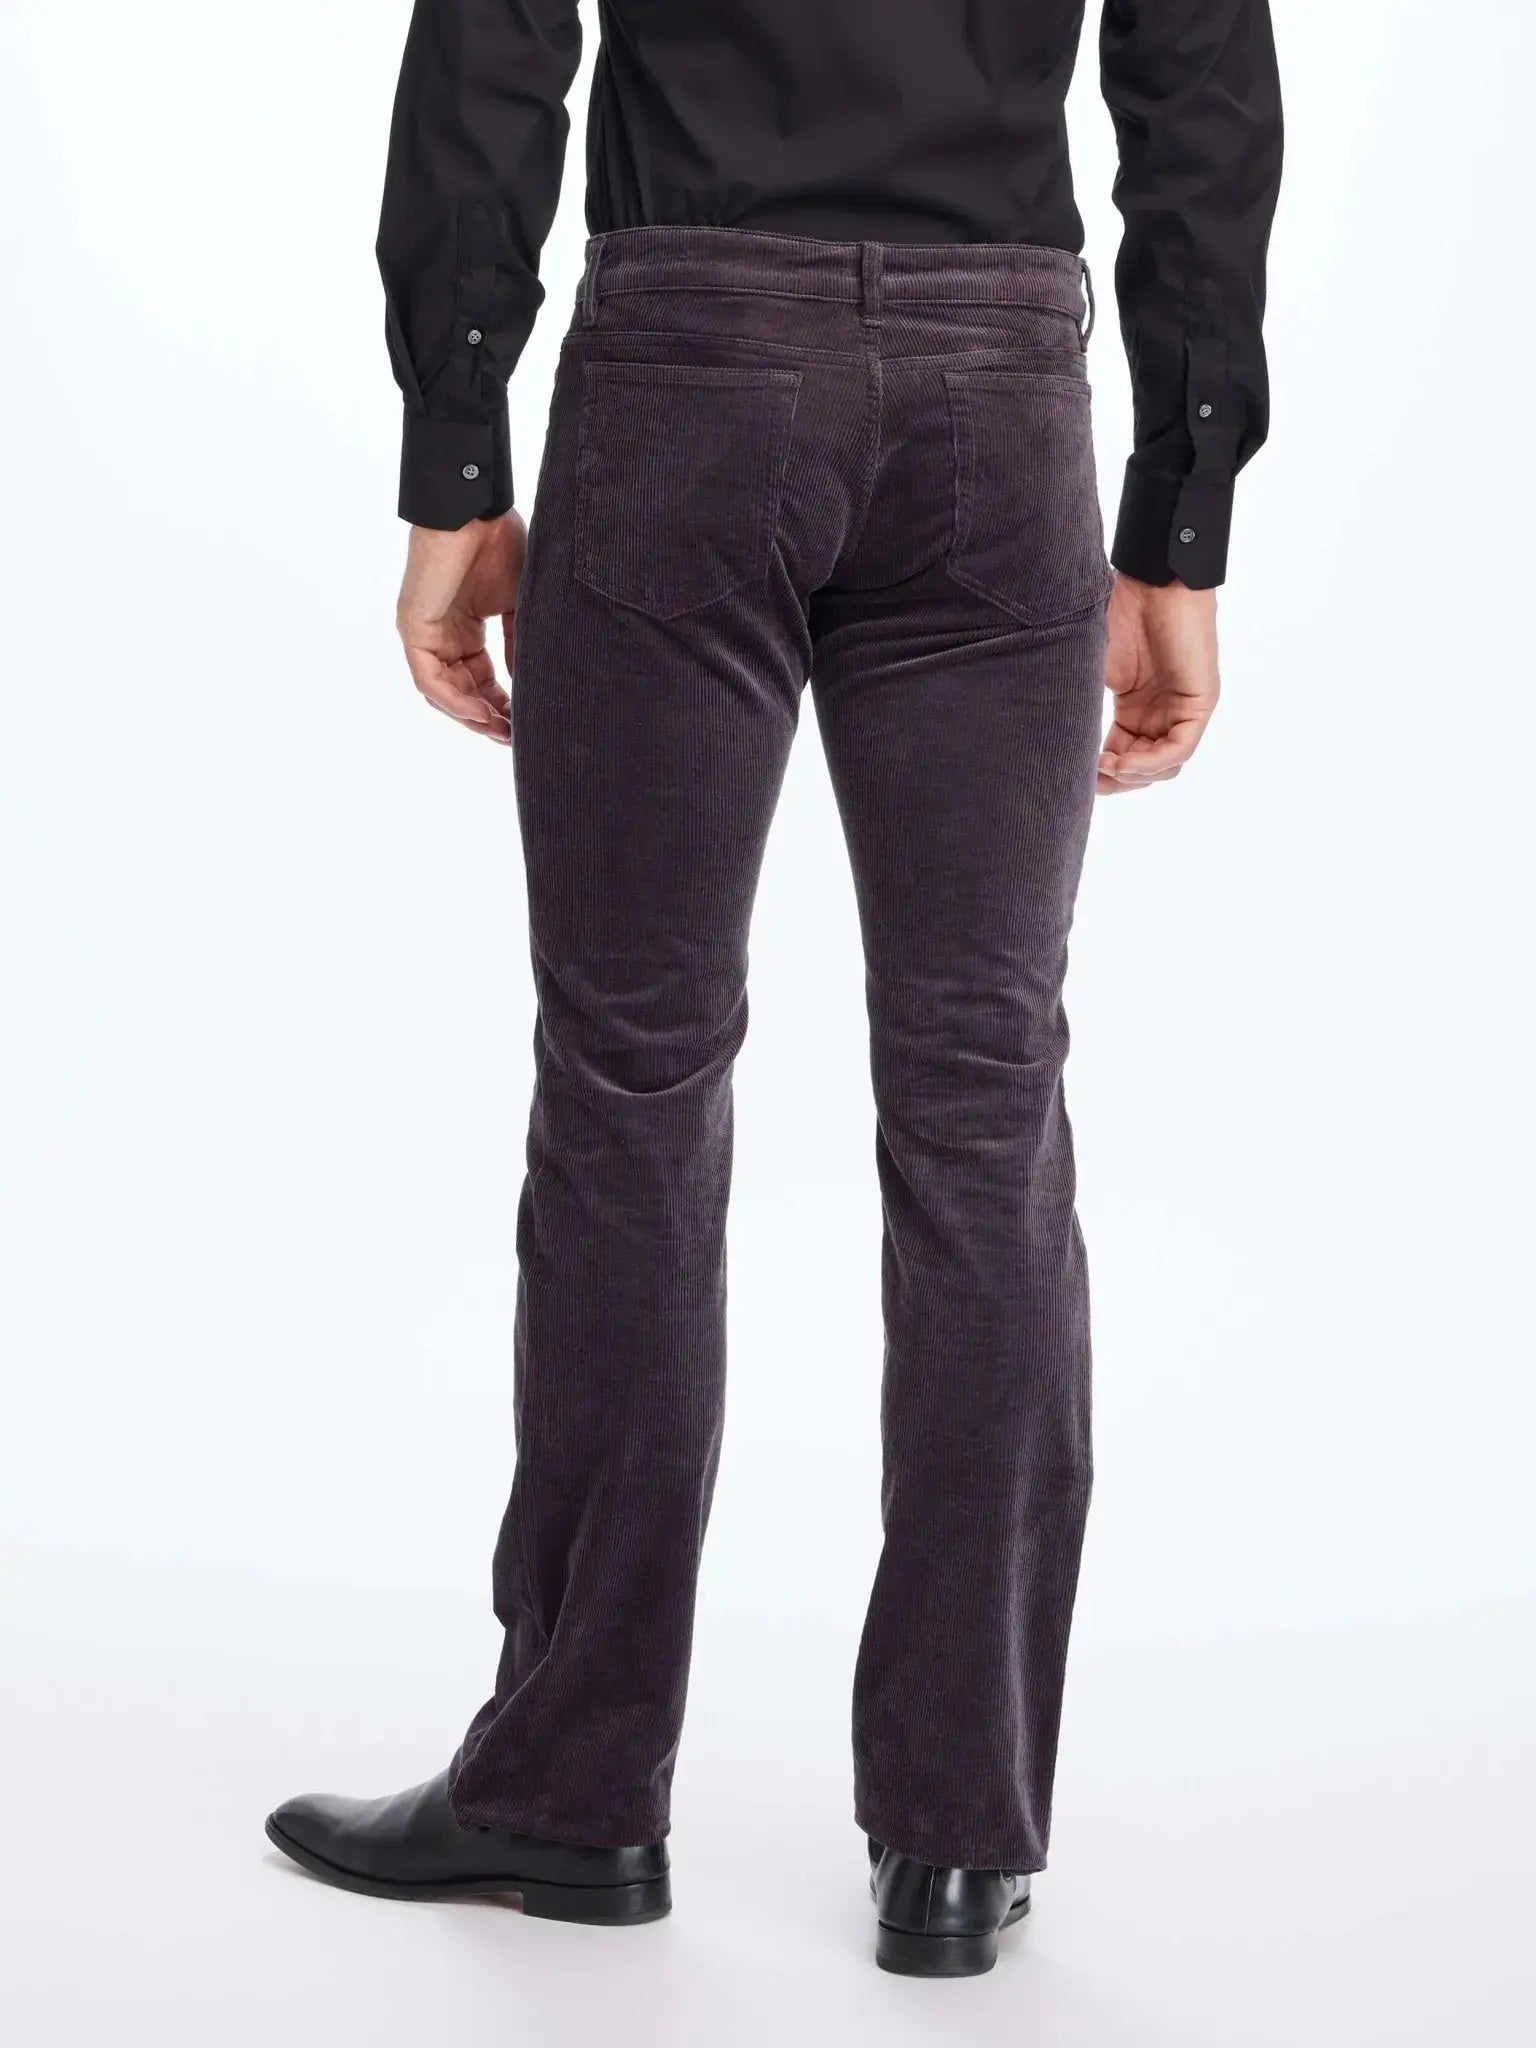 Men's corduroy trousers FBM006-011-02_DK GREY